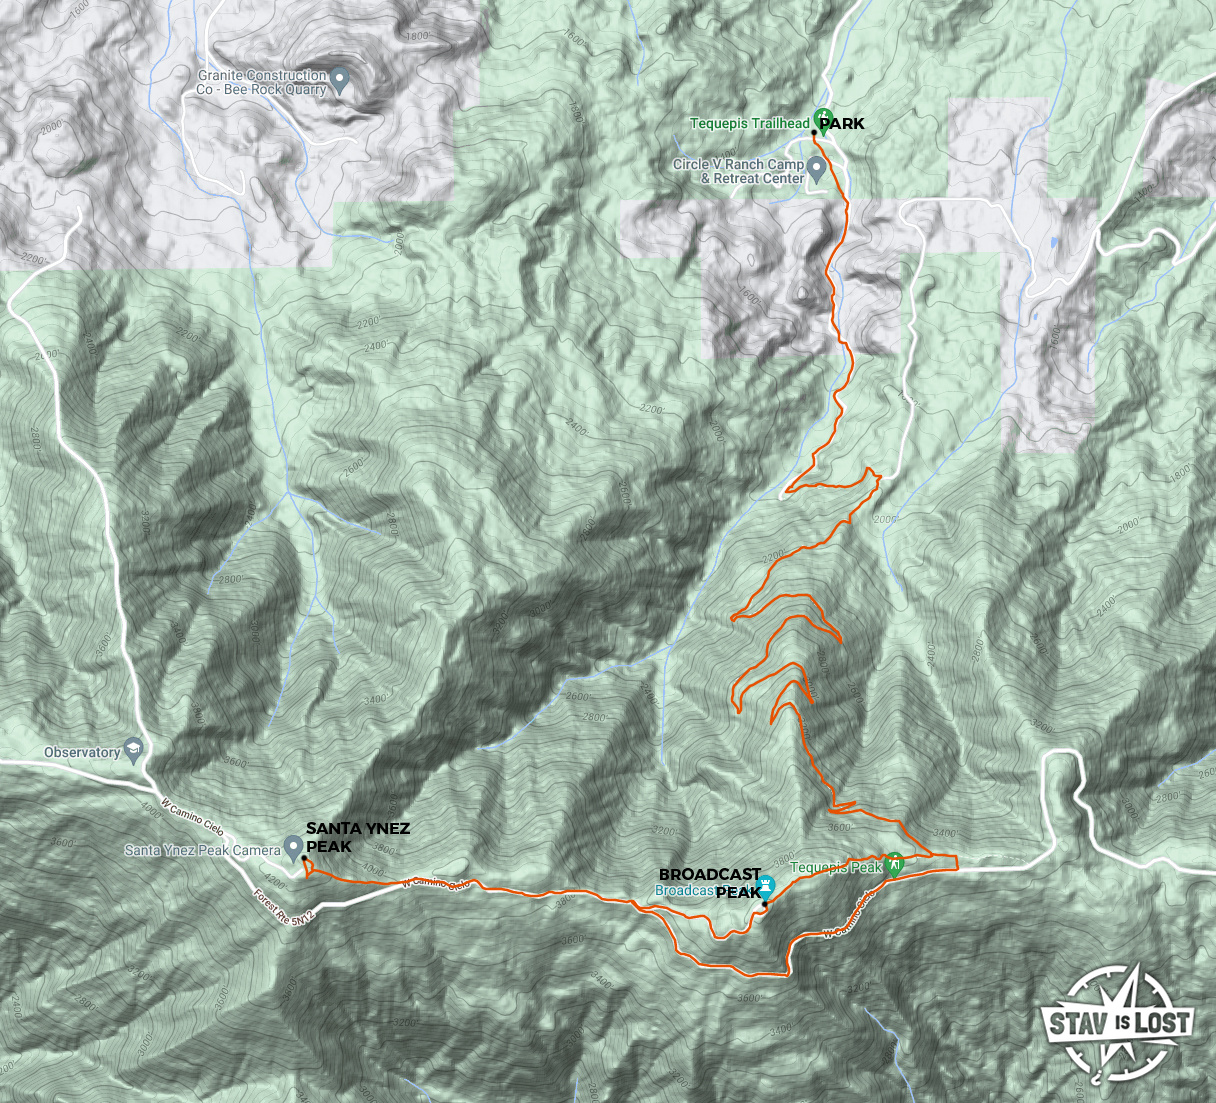 map for Santa Ynez Peak via Tequepis Trail by stav is lost